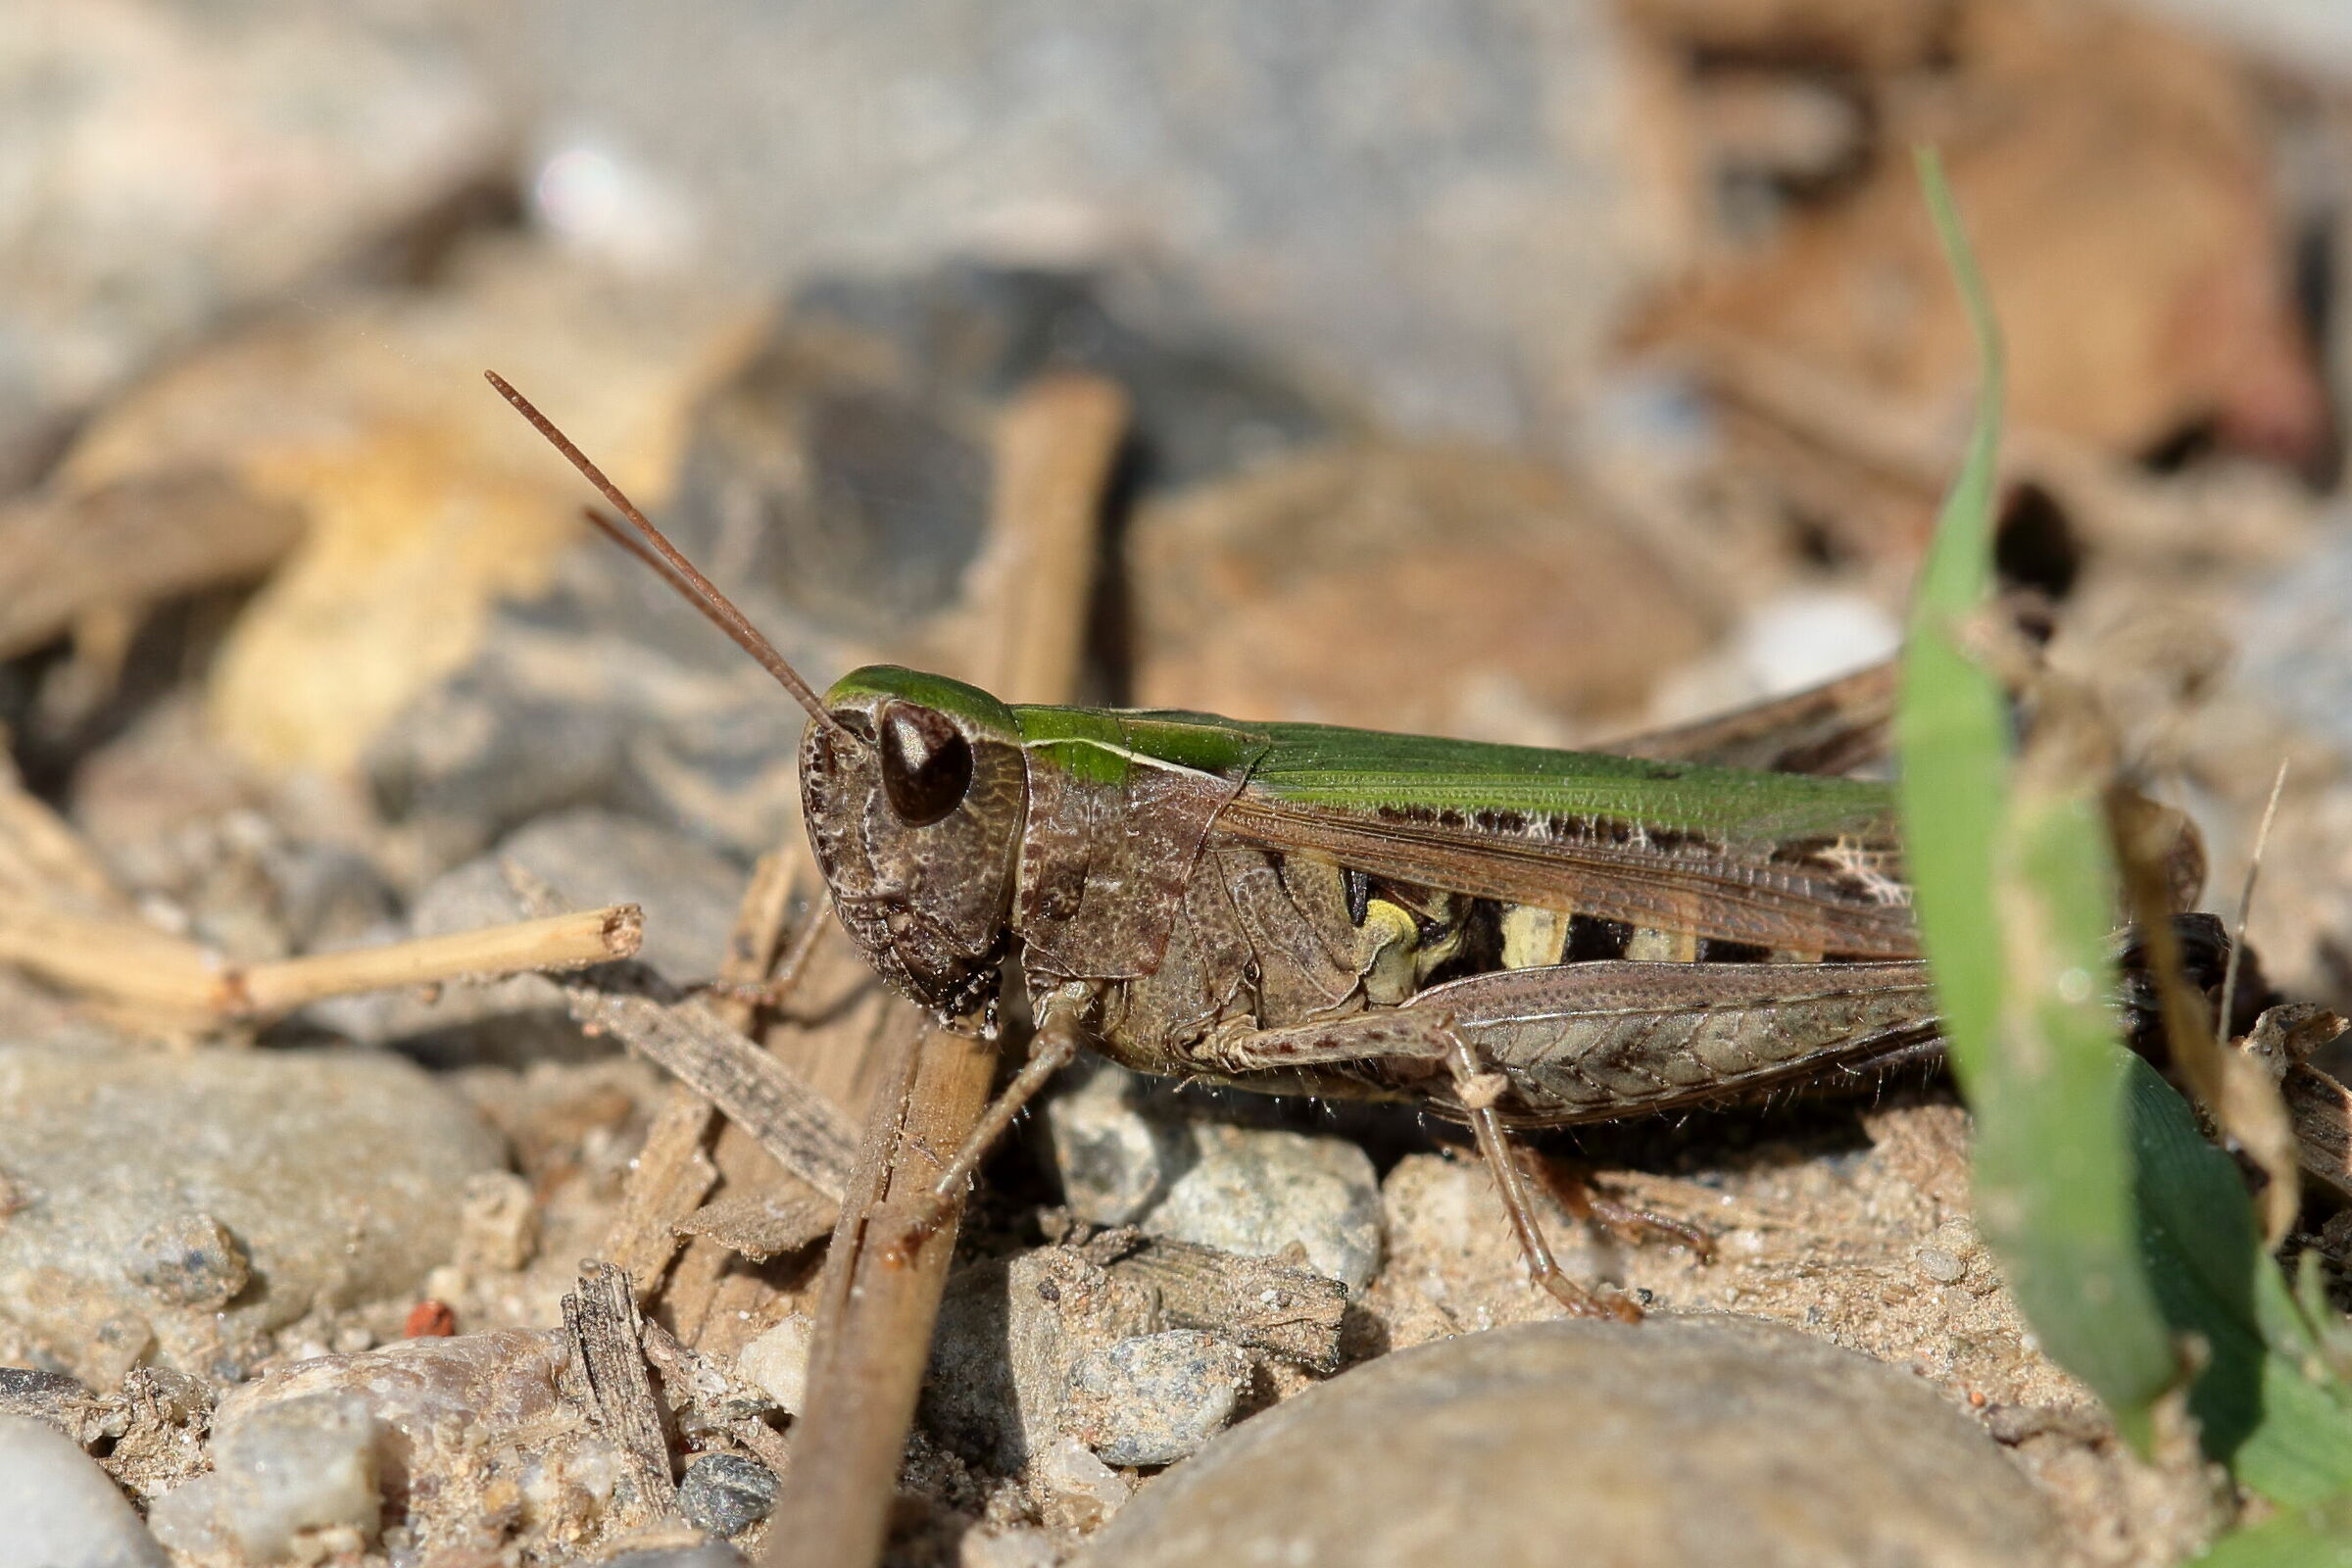 Another "unknown" grasshopper...